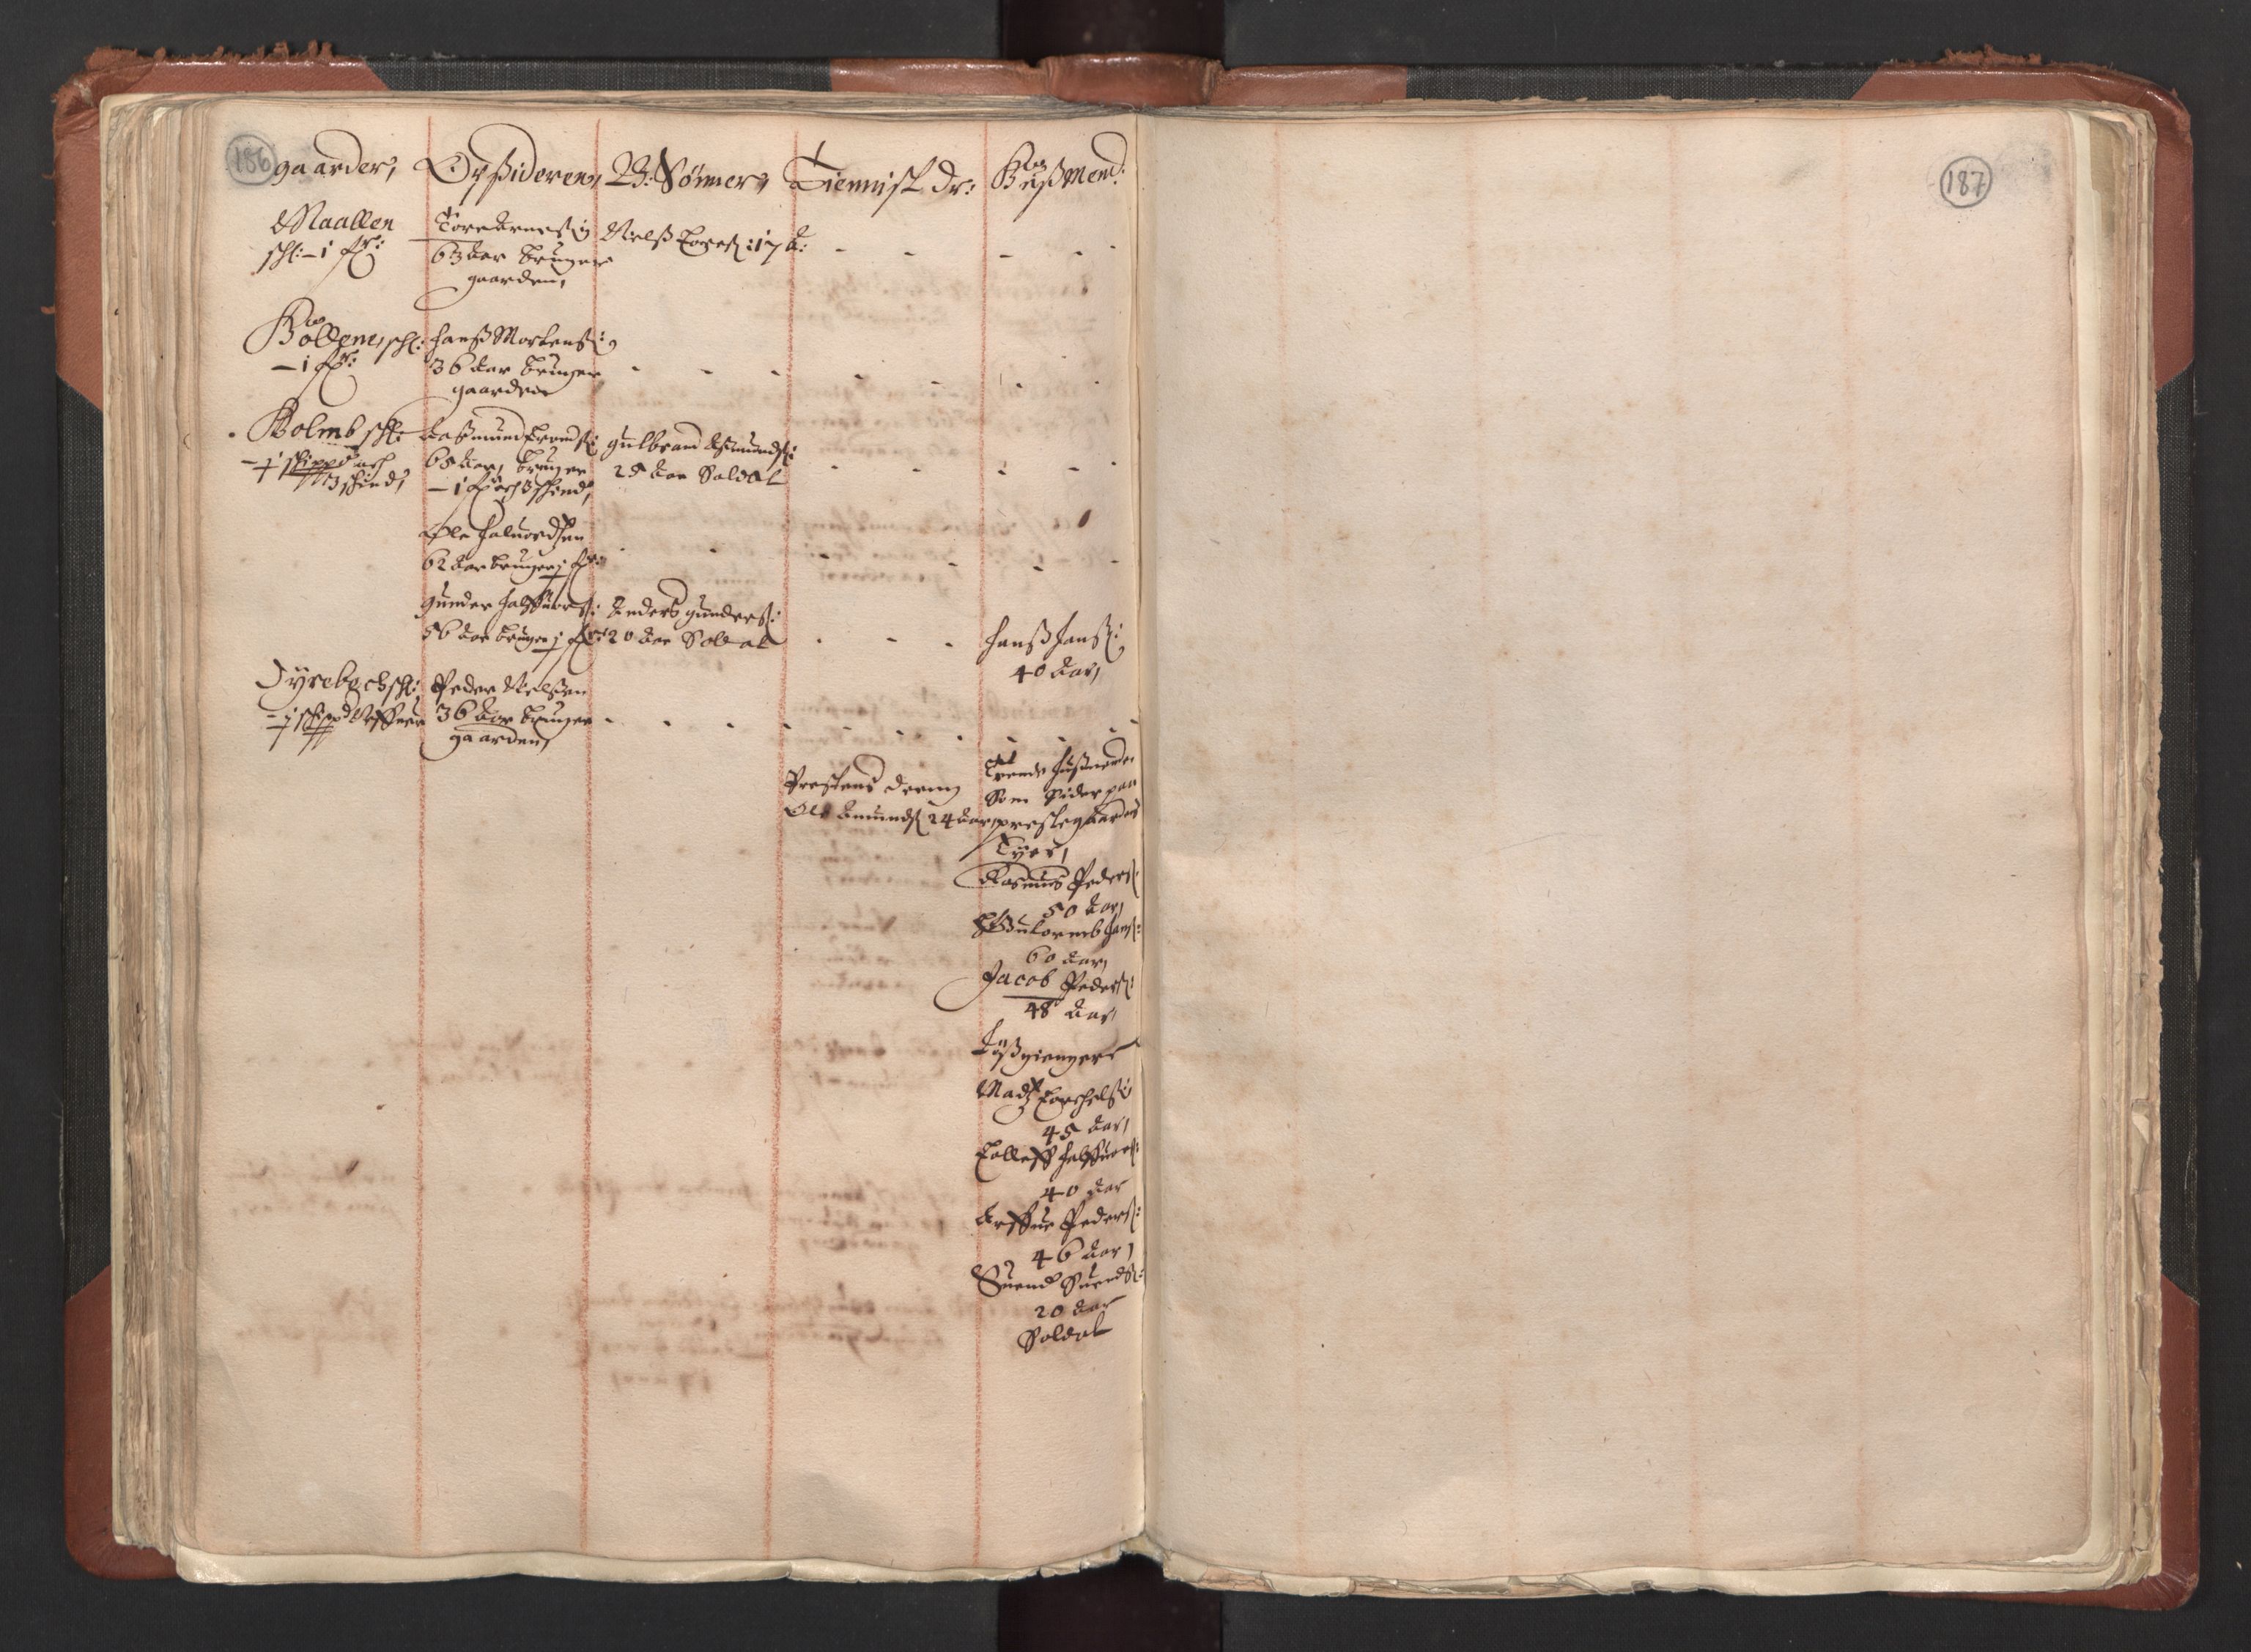 RA, Fogdenes og sorenskrivernes manntall 1664-1666, nr. 1: Fogderier (len og skipreider) i nåværende Østfold fylke, 1664, s. 186-187